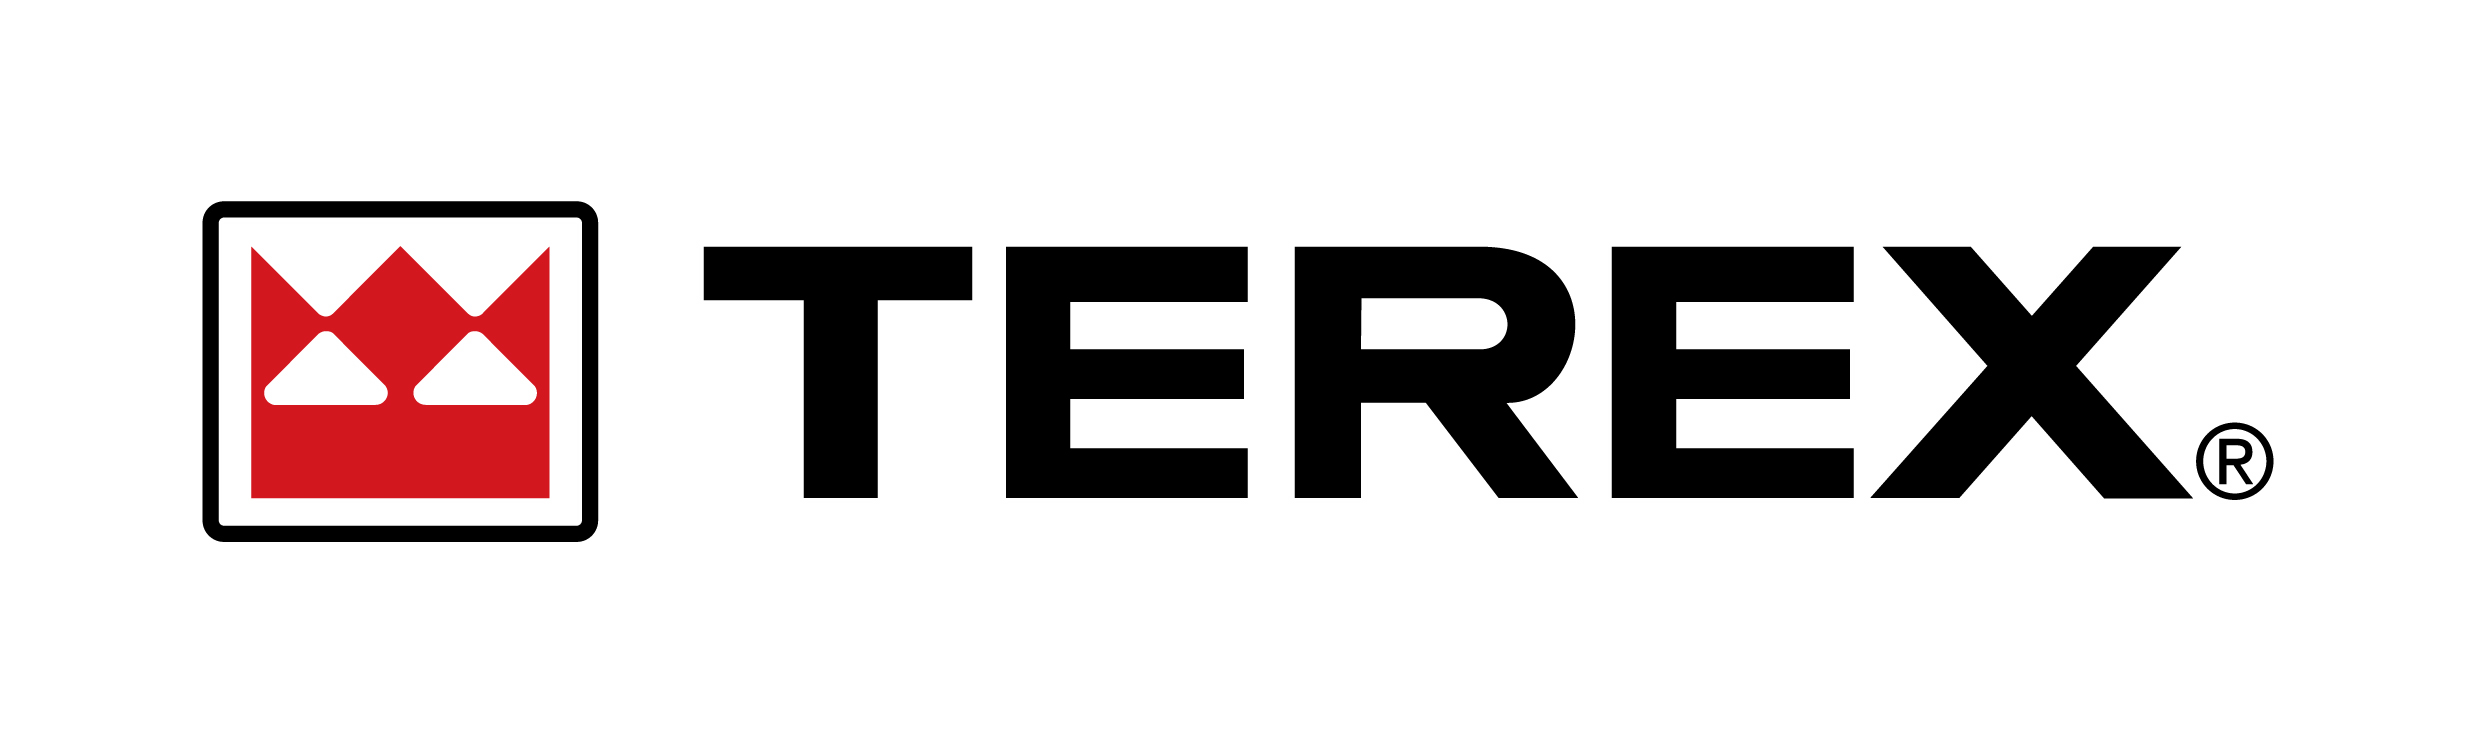 TEREK Logo photo - 1